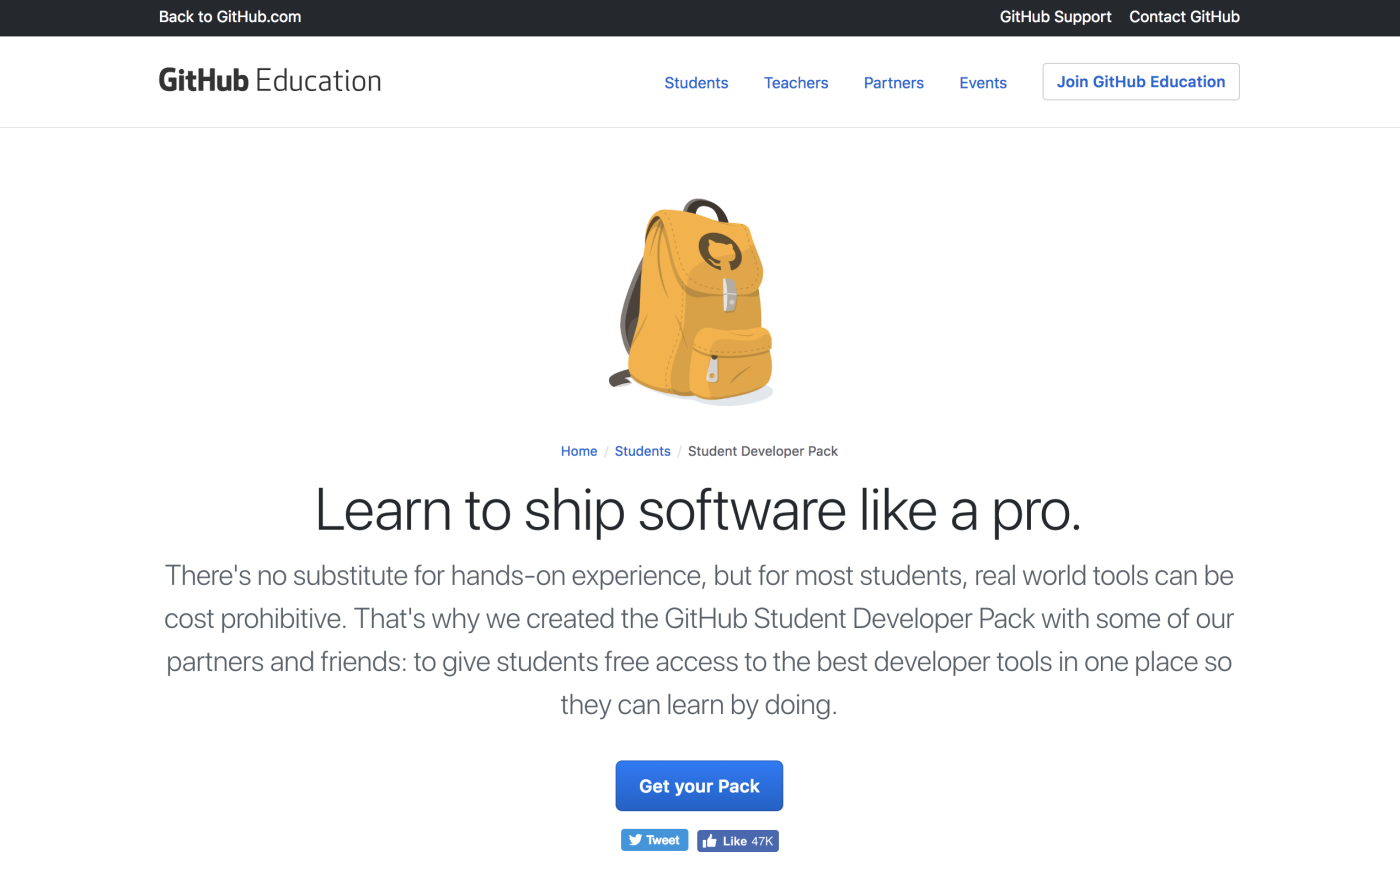 Student discounts for developer tools